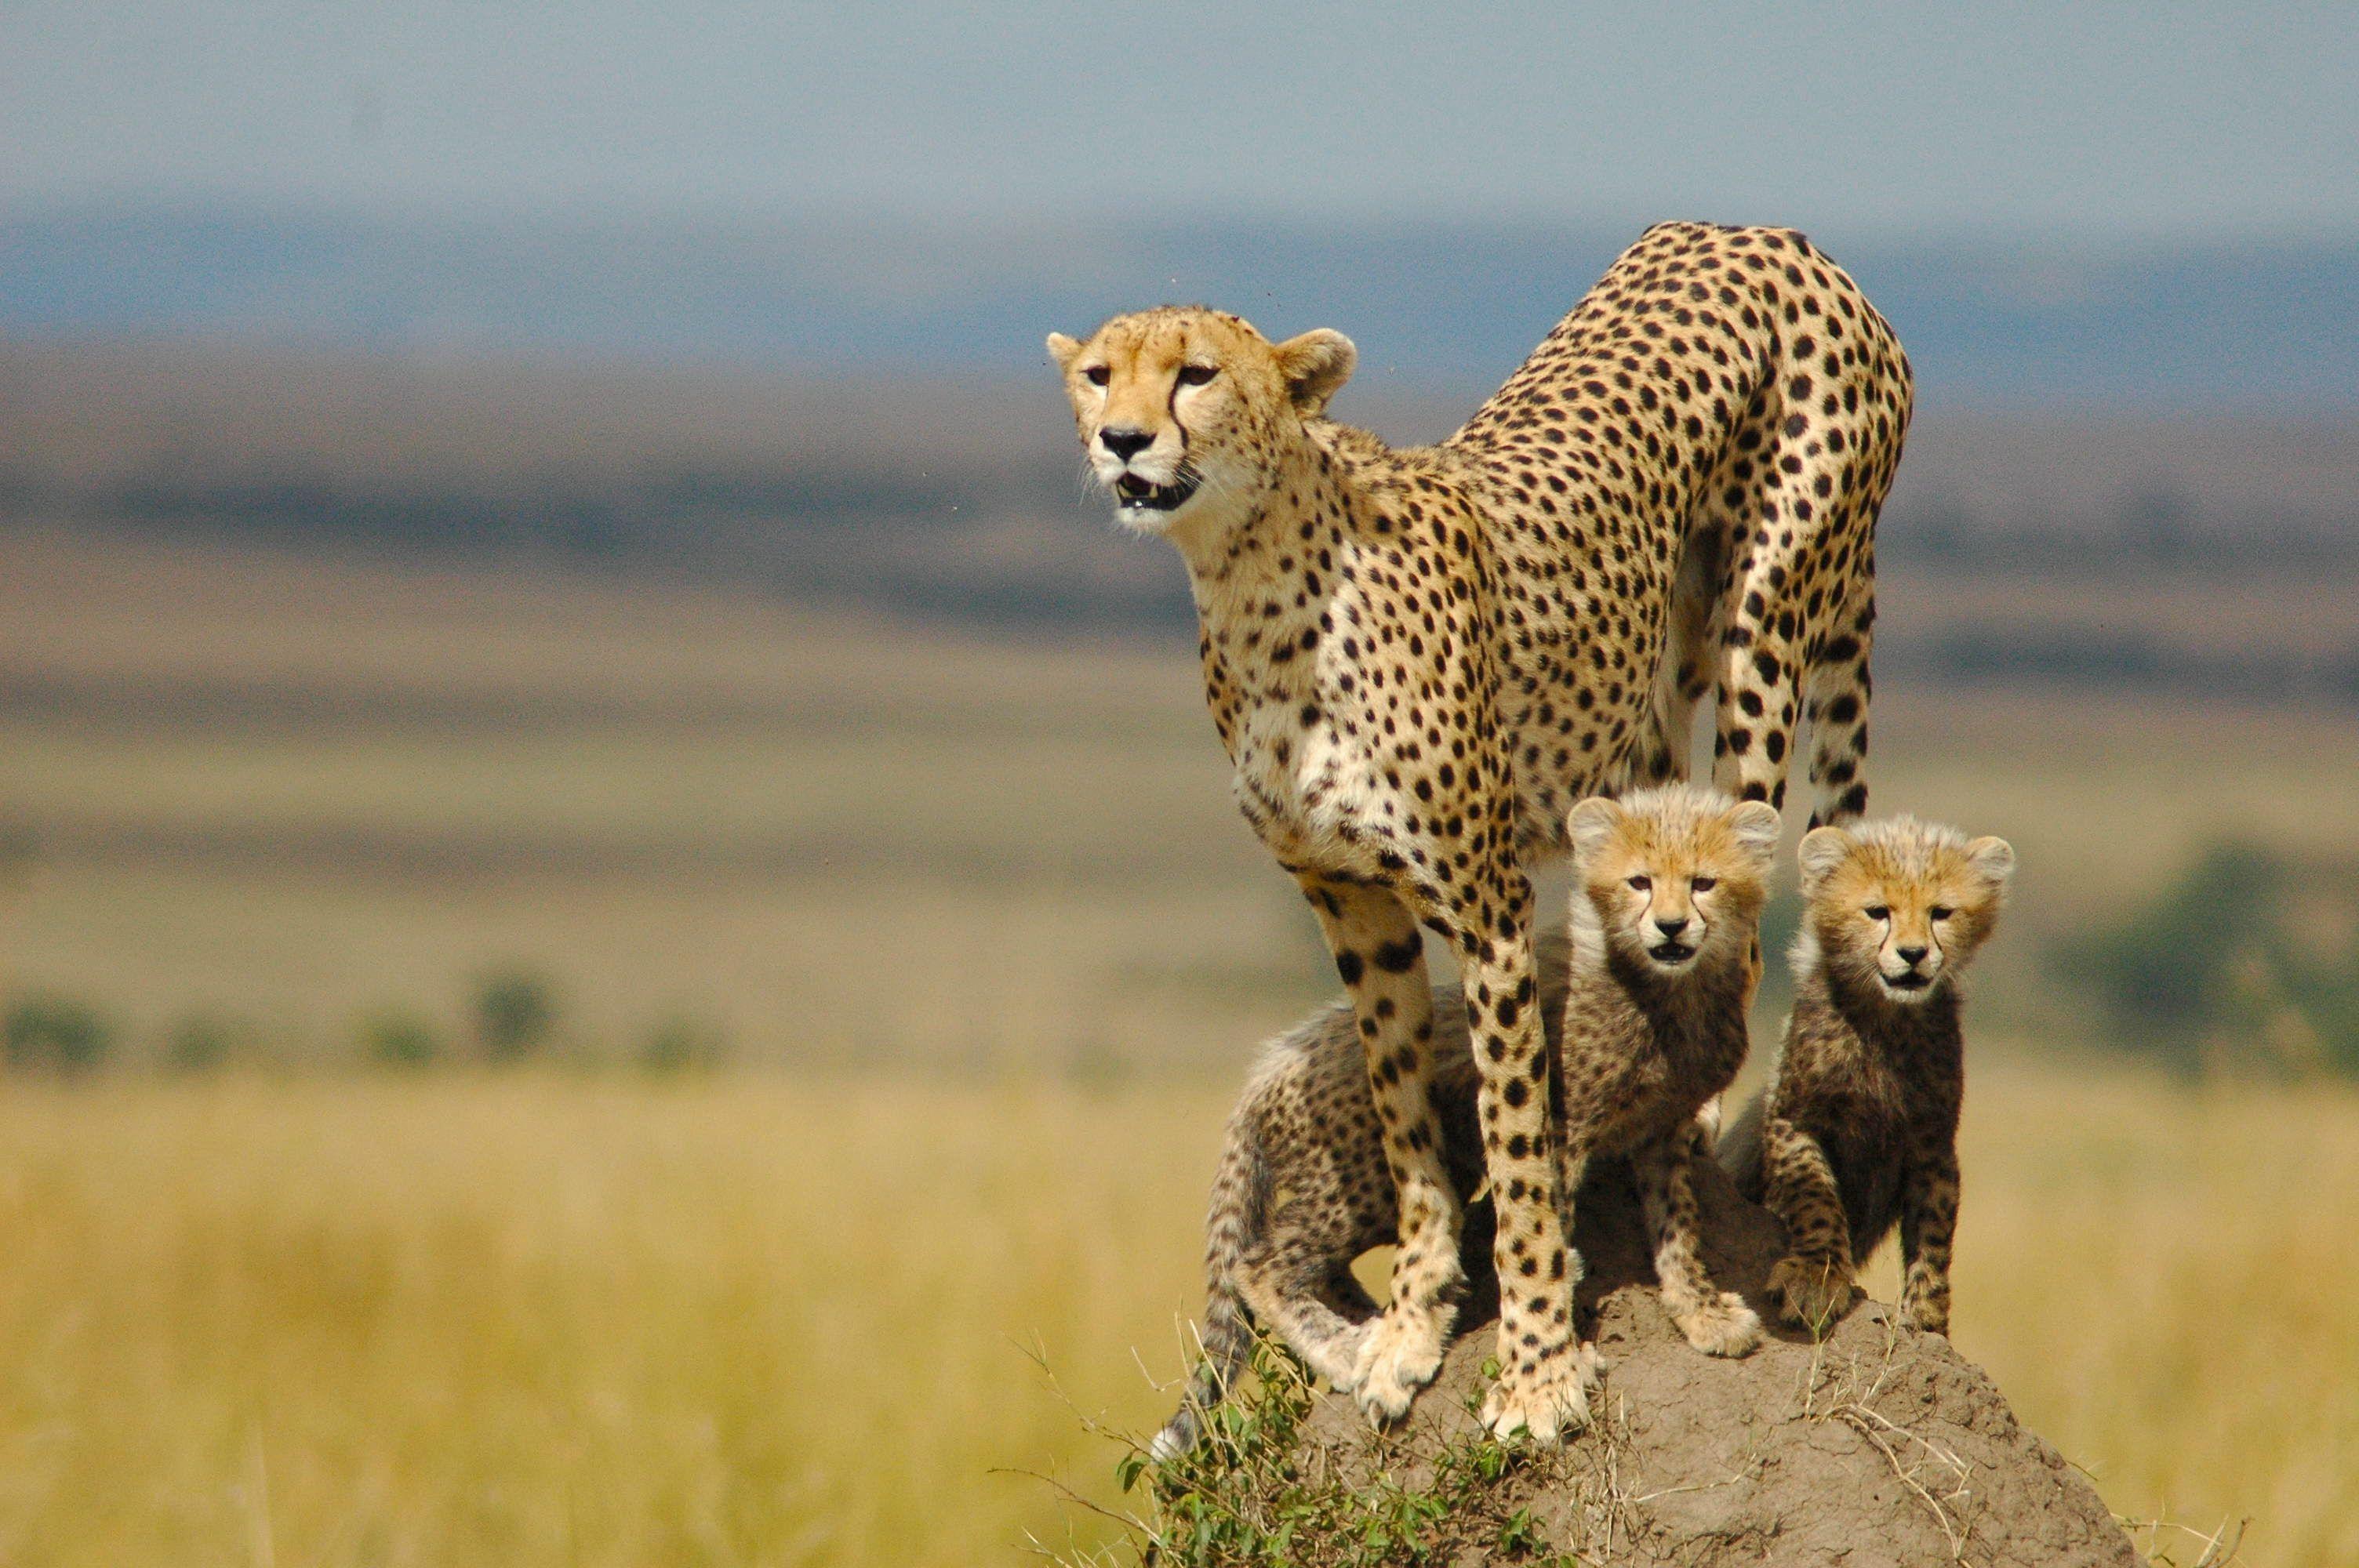 Beautiful Cheetah Image, Best Cheetah Wallpaper